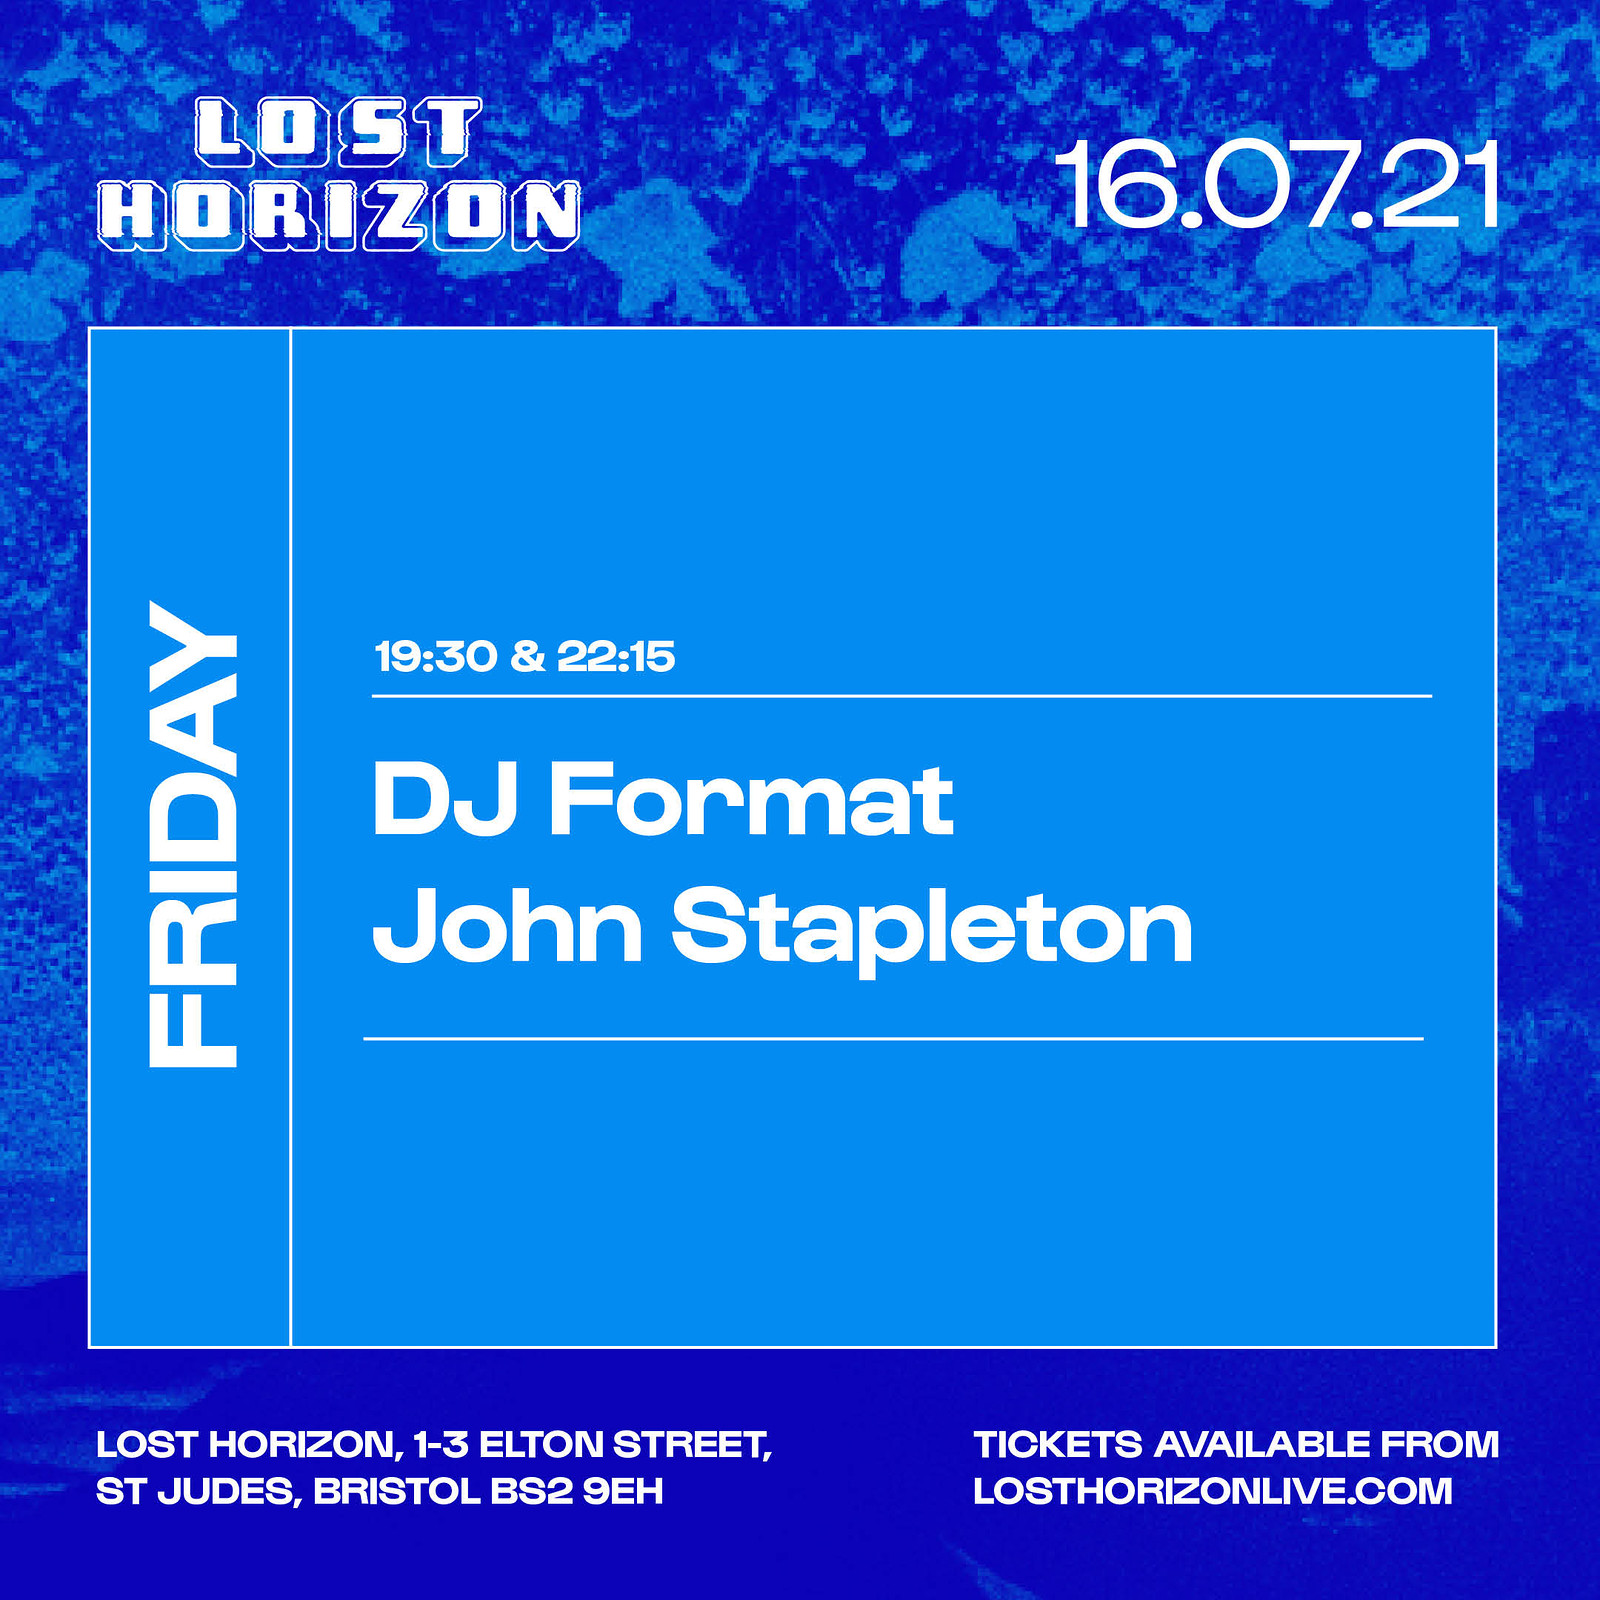 DJ Format, John Stapleton at Lost Horizon